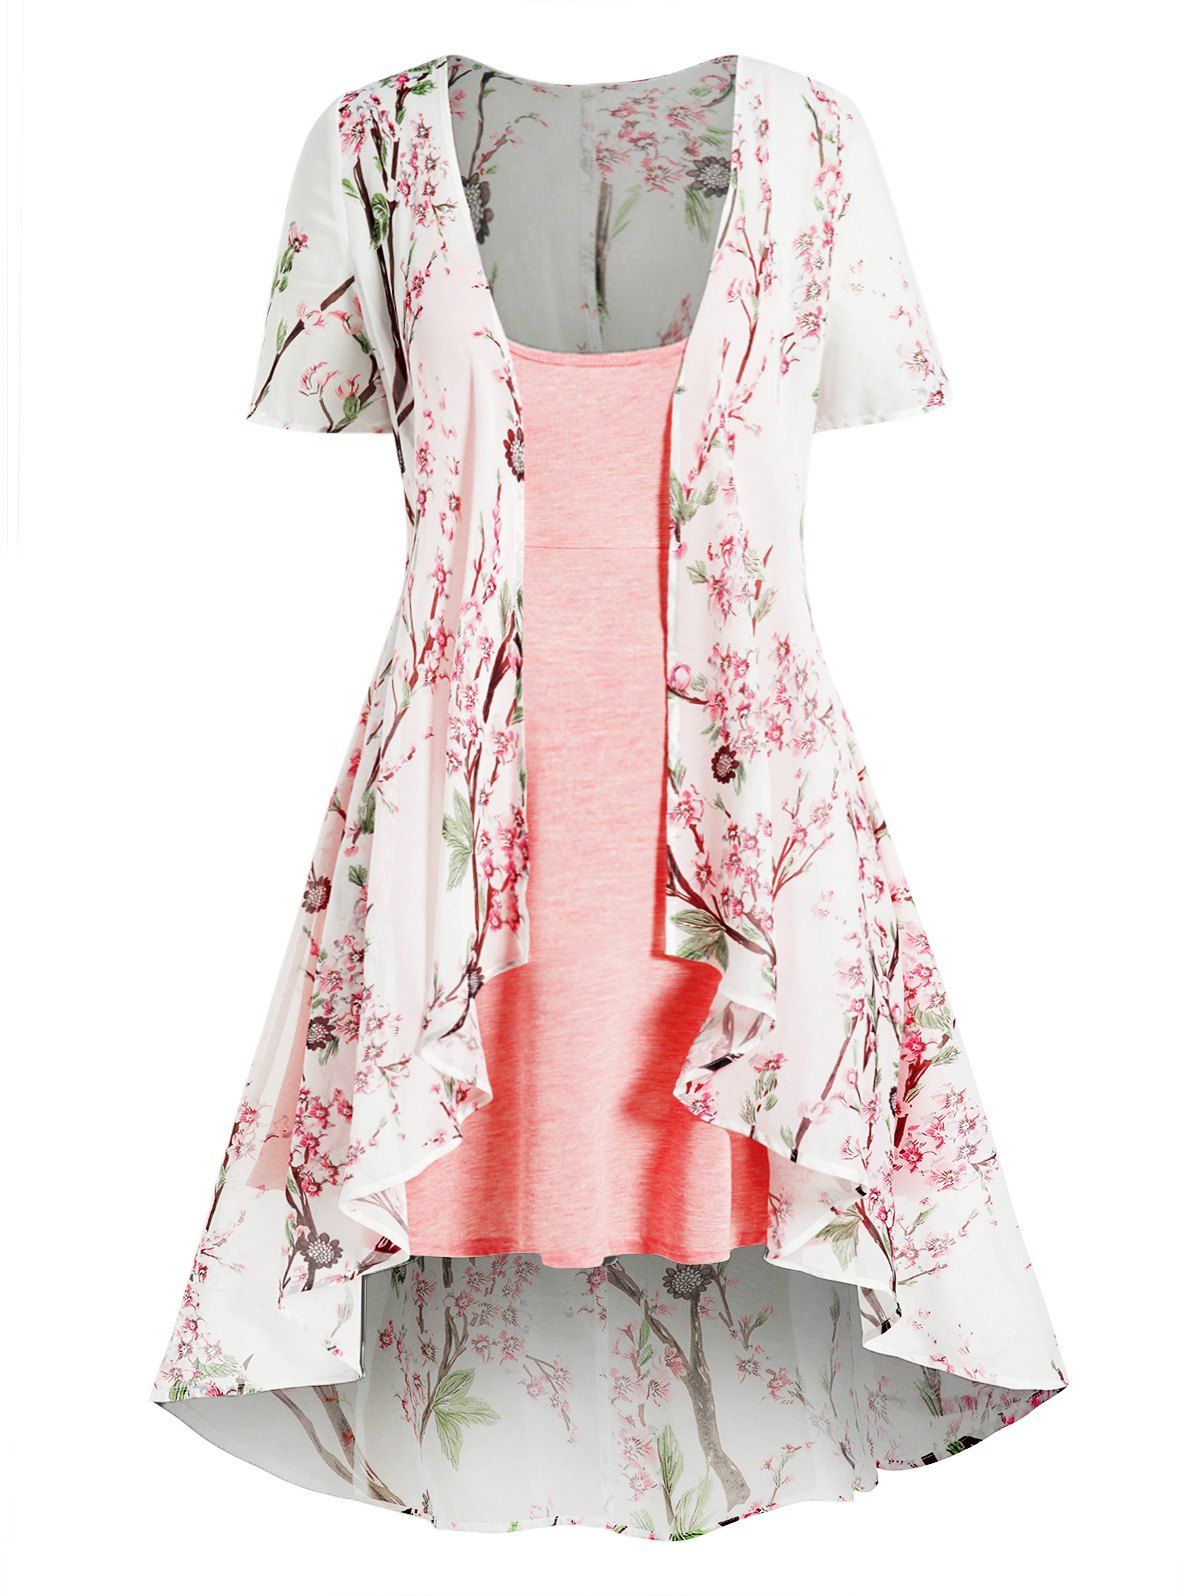 Plus Size Dress Allover Flower Print Sheer Asymmetric Short Sleeve Longline Top And Spaghetti Strap High Waist A Line Cami Dress Set - LIGHT PINK 5X